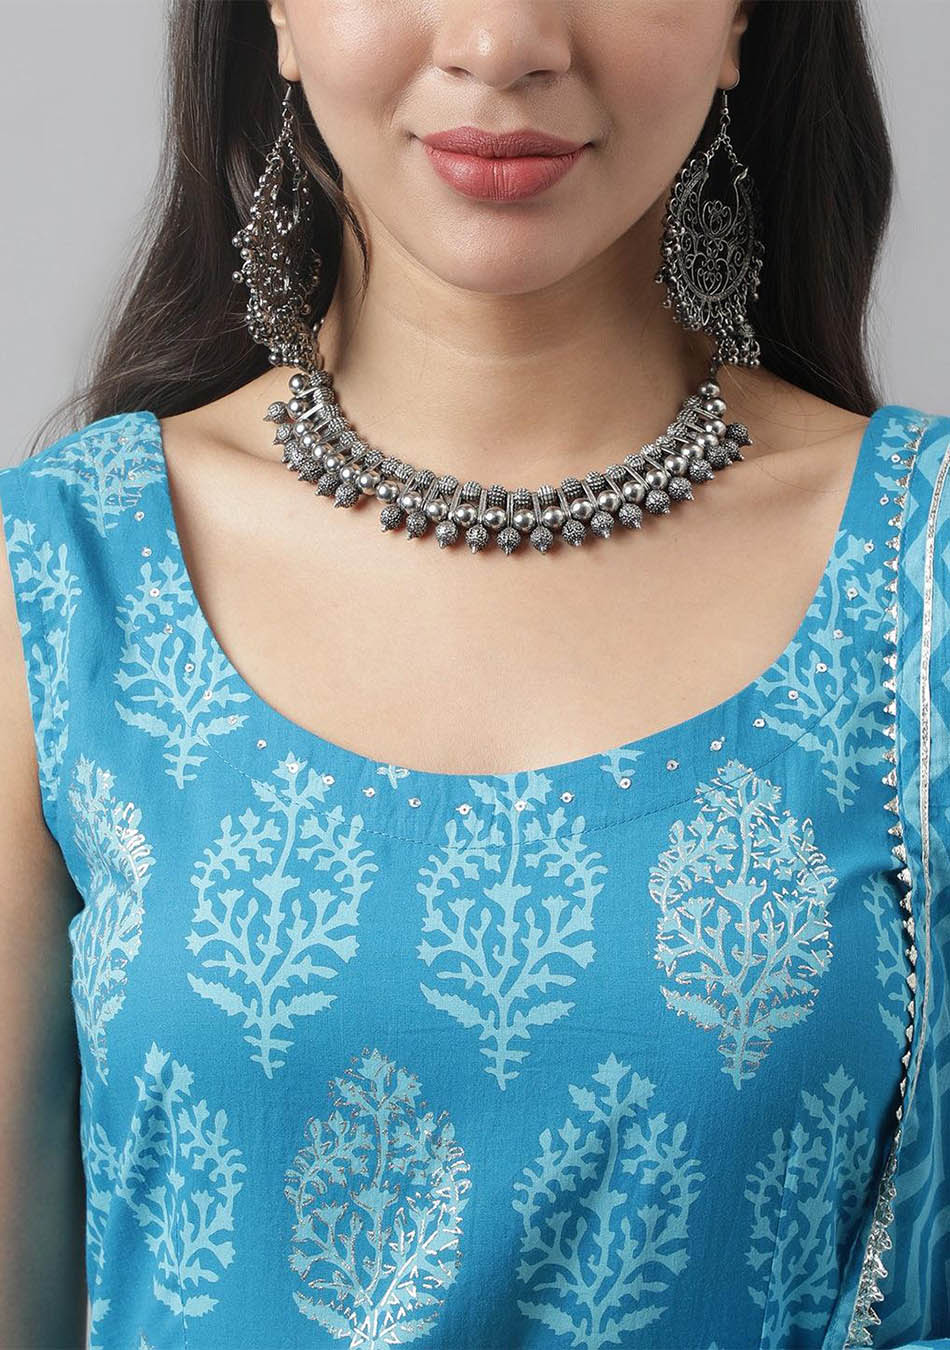 Turquoise Blue Floral Cotton Anarkali Kurta Pant Set with Matching Dupatta